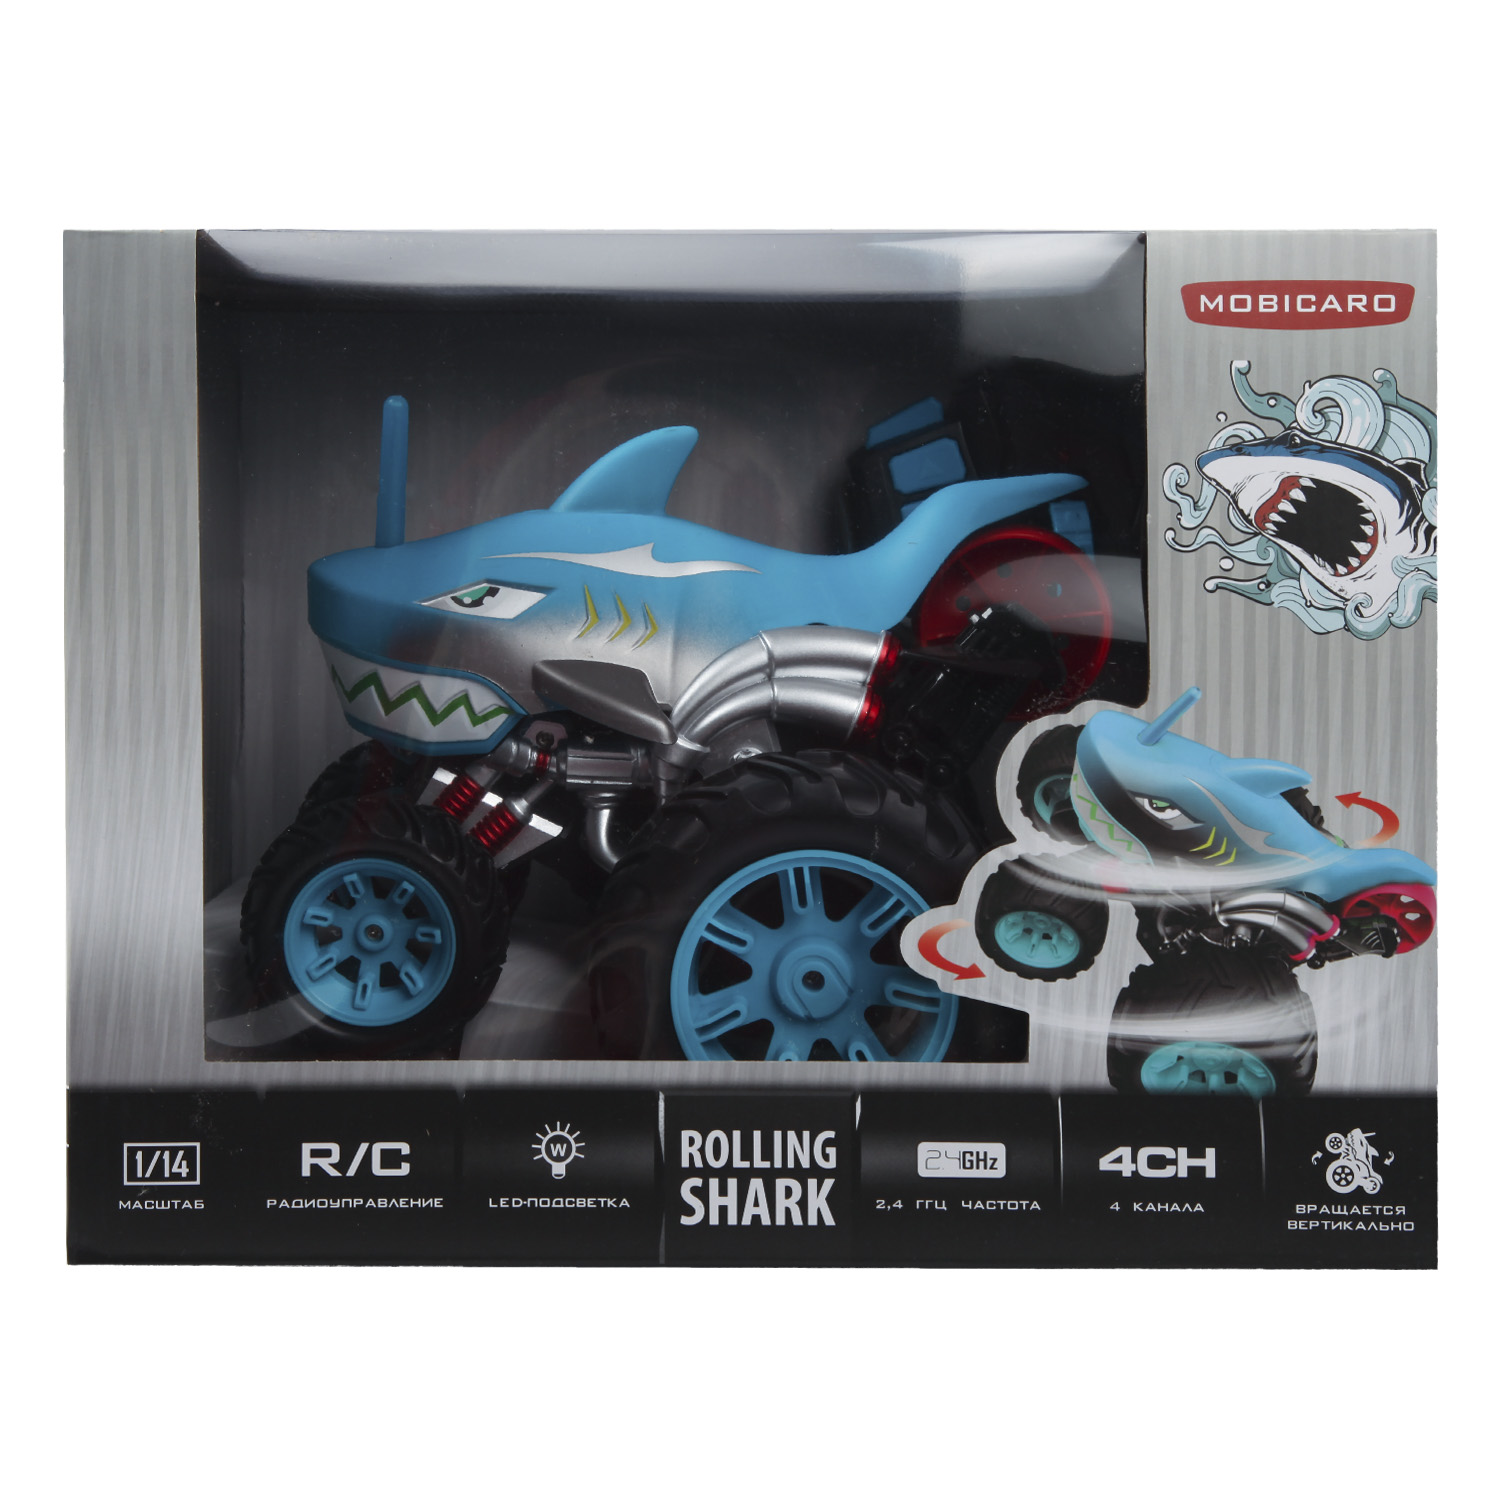 Машинка Mobicaro РУ Rolling Shark 333-WL22161 - фото 2